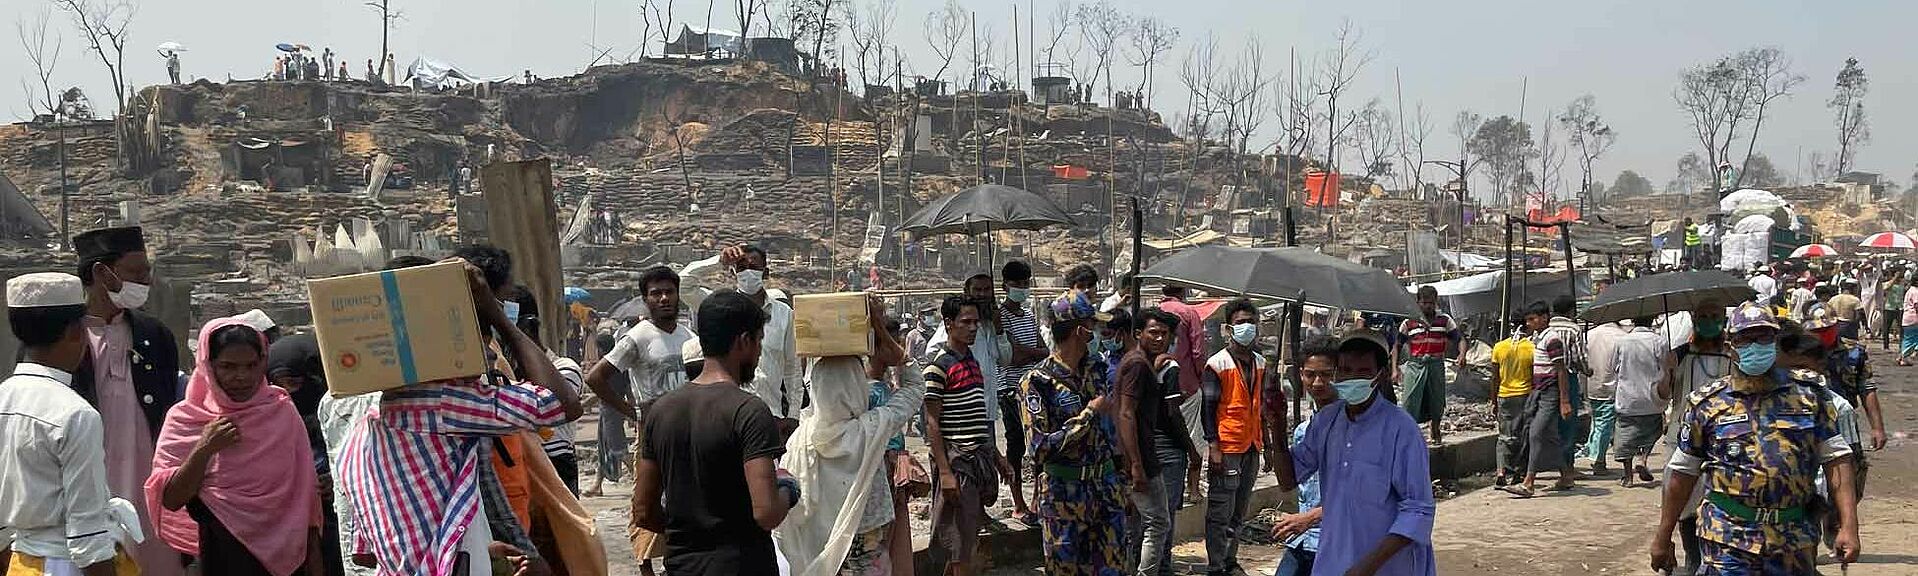 Das Flüchtlingslager nach dem Brand